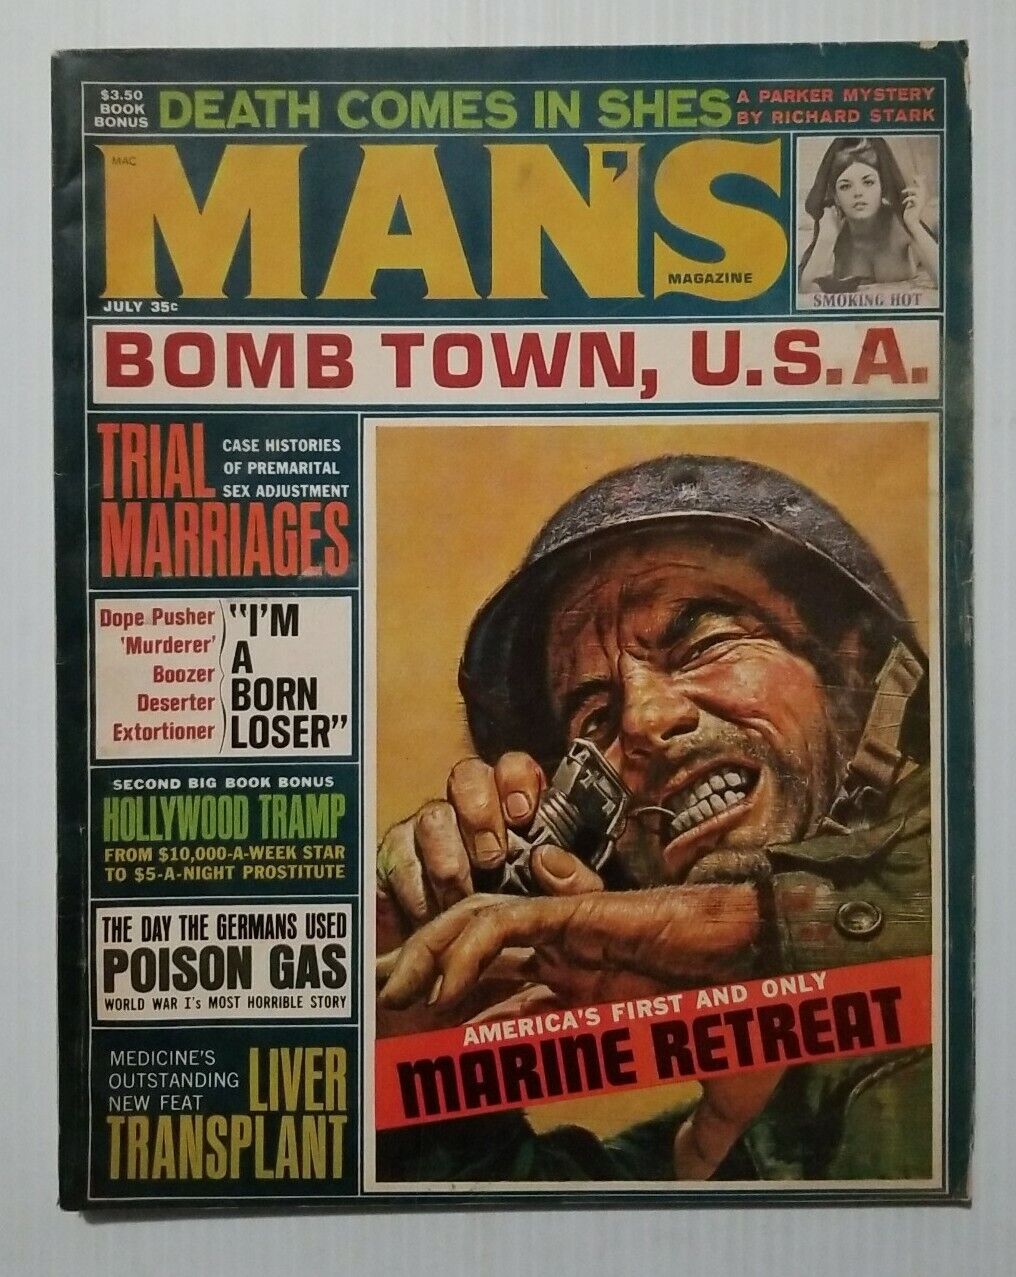 MAN'S MAGAZINE July 1964 Mens Pulp Fiction Magazine War Stories Bomb Town USA